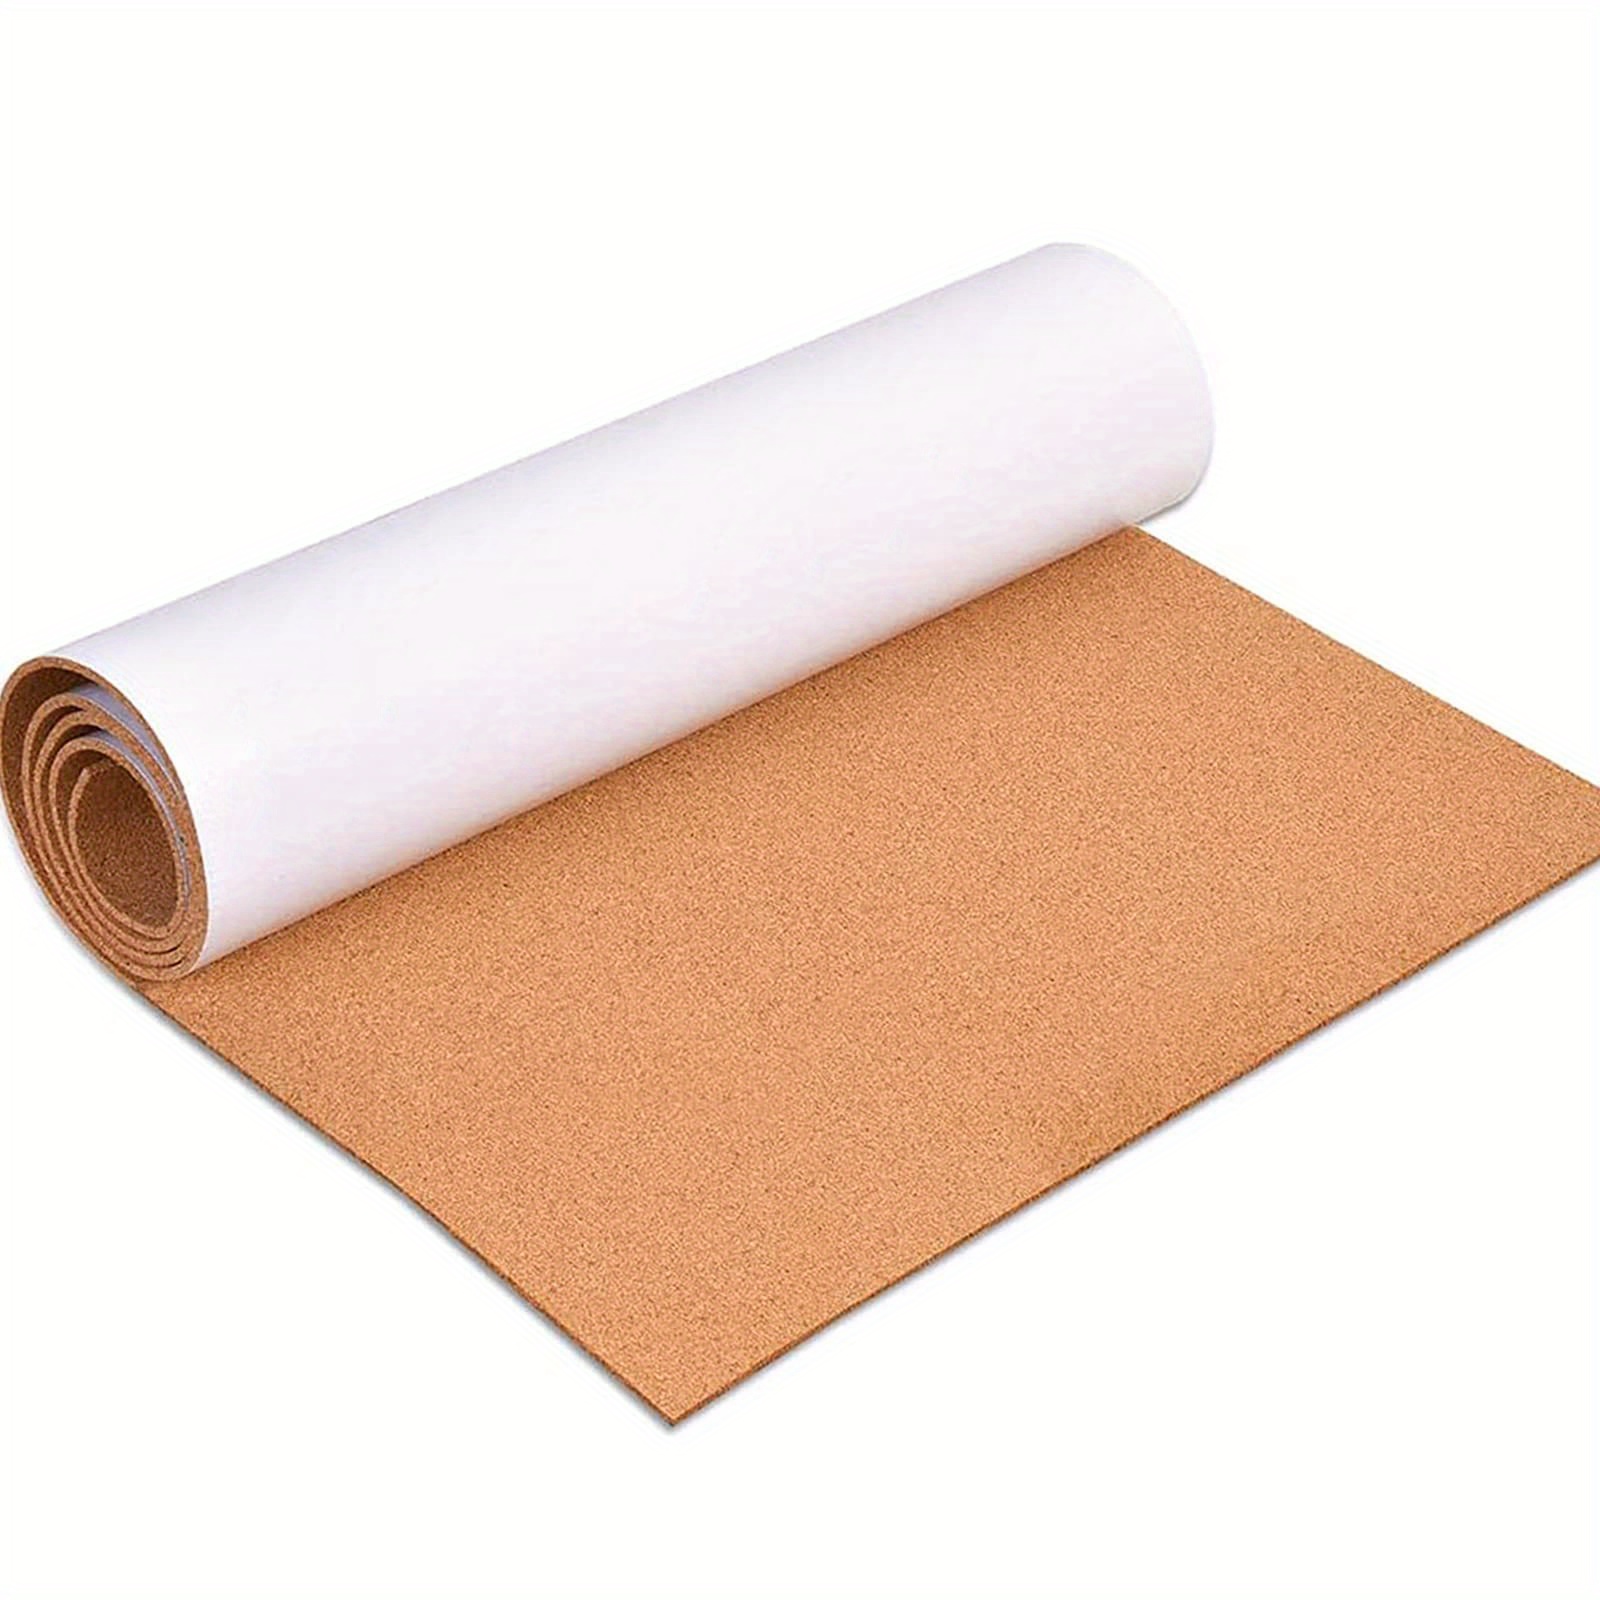 Cork Board Roll EXTRA LARGE 1/4 Thick Non-Adhesive Corkboard Bulletin Sheet